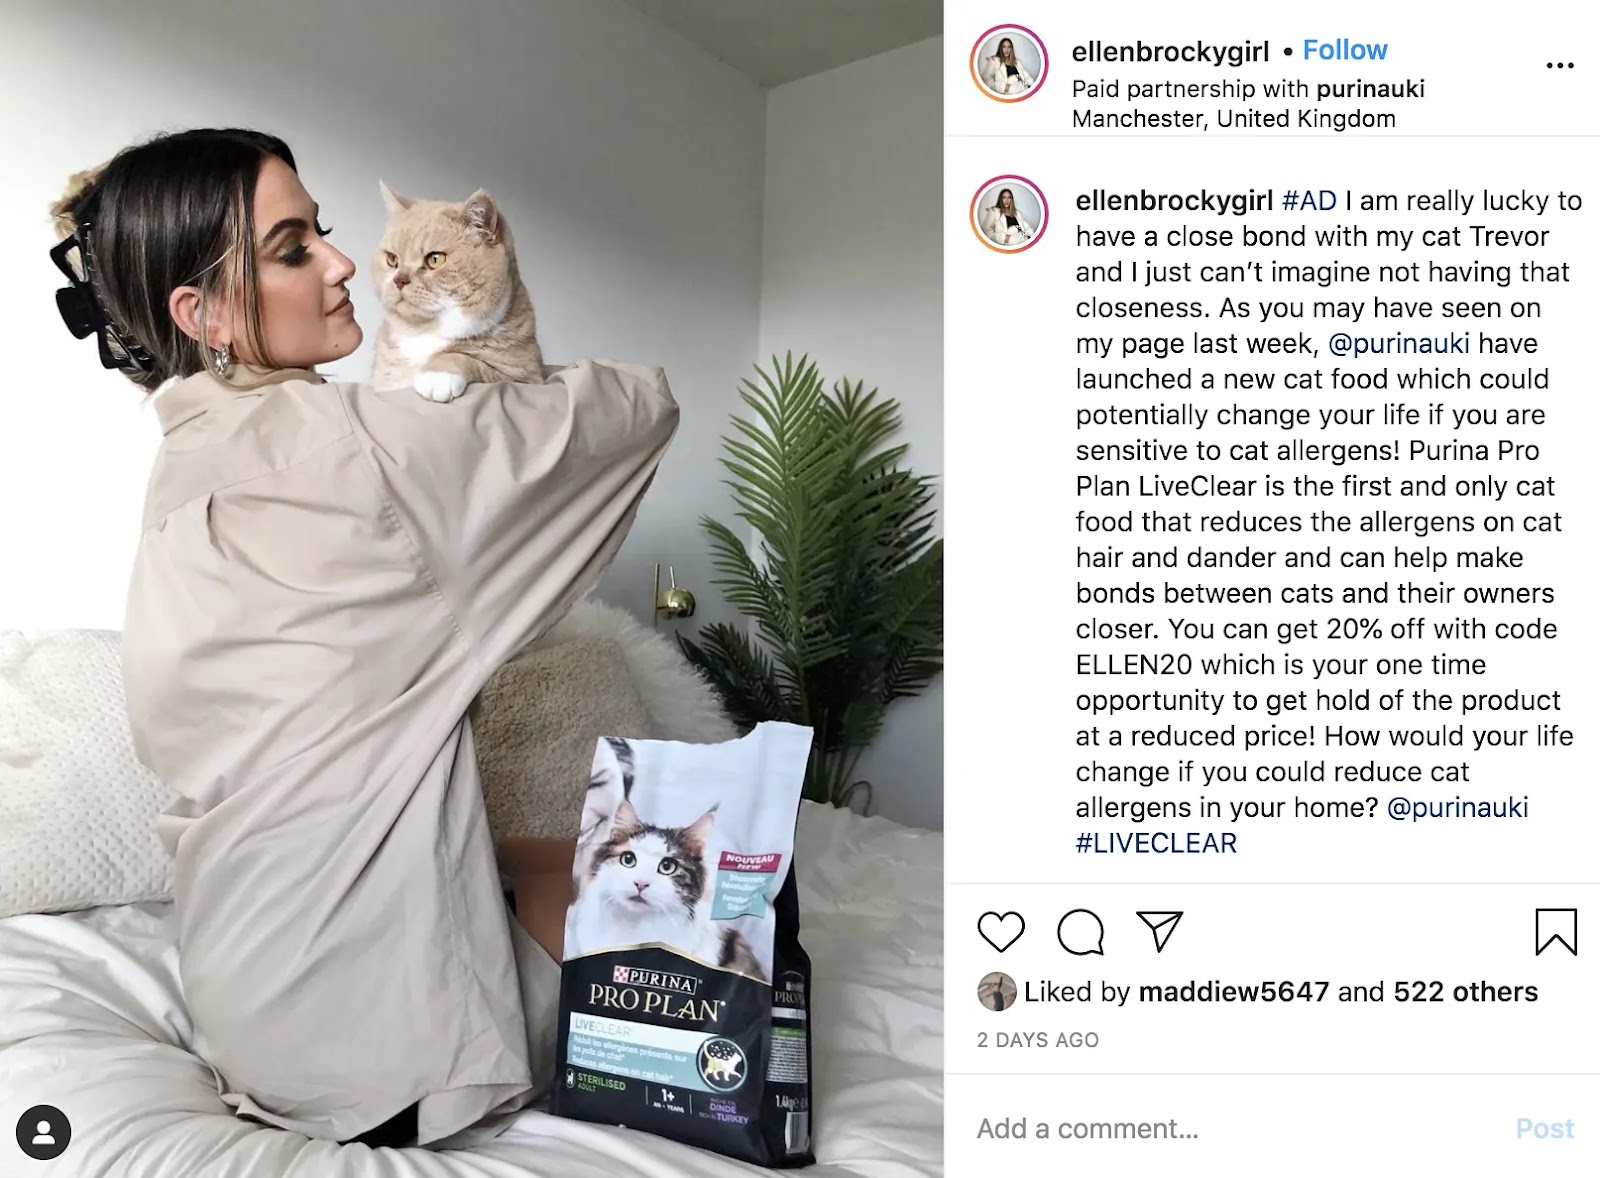 Influencer @ellenbrockygirl's post on Instagram promoting Purina's cat food